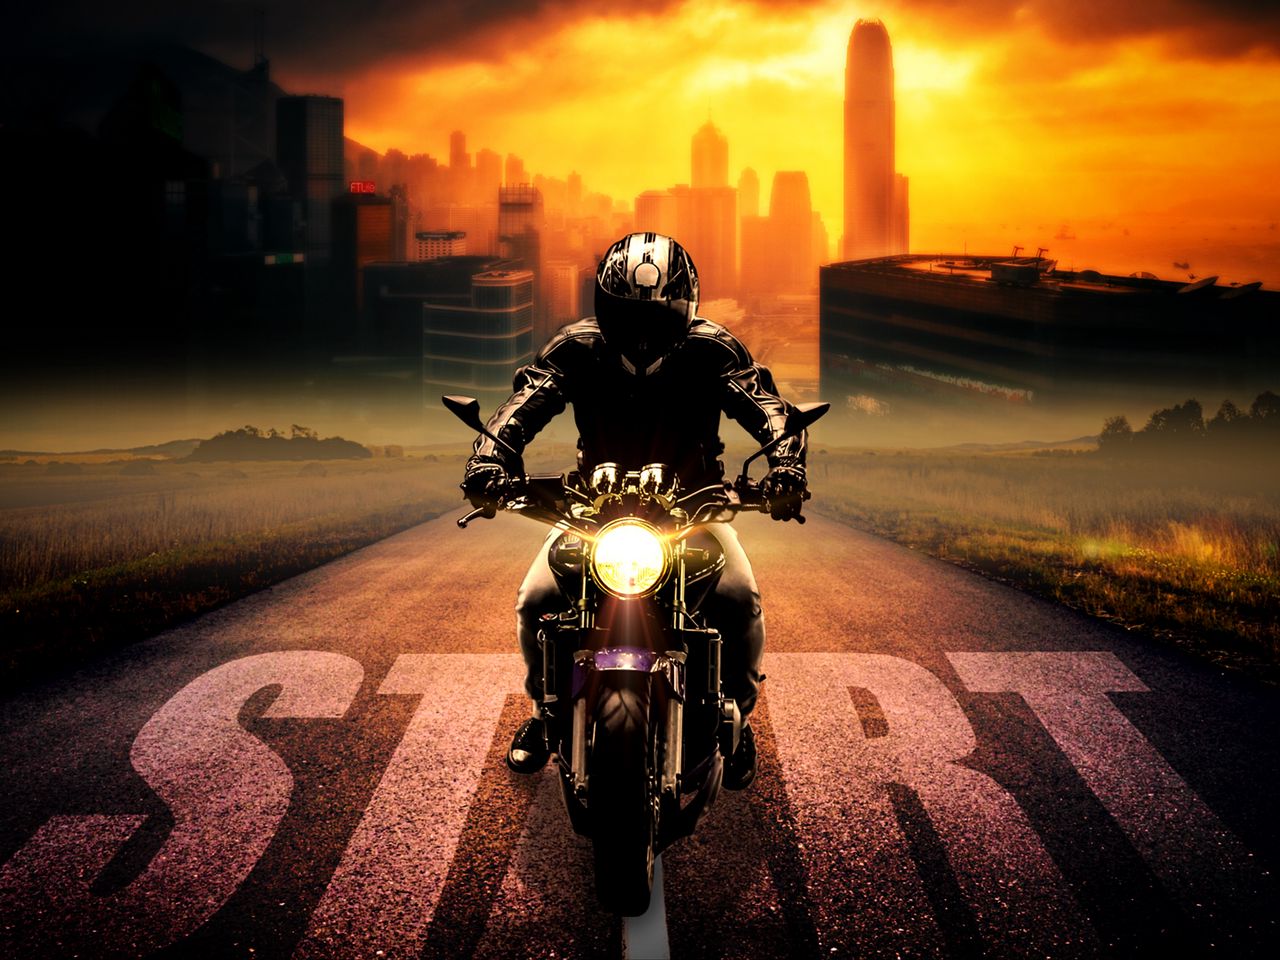 Download wallpaper 1280x960 biker, bike, motorcycle, motorcyclist, photoshop  standard 4:3 hd background